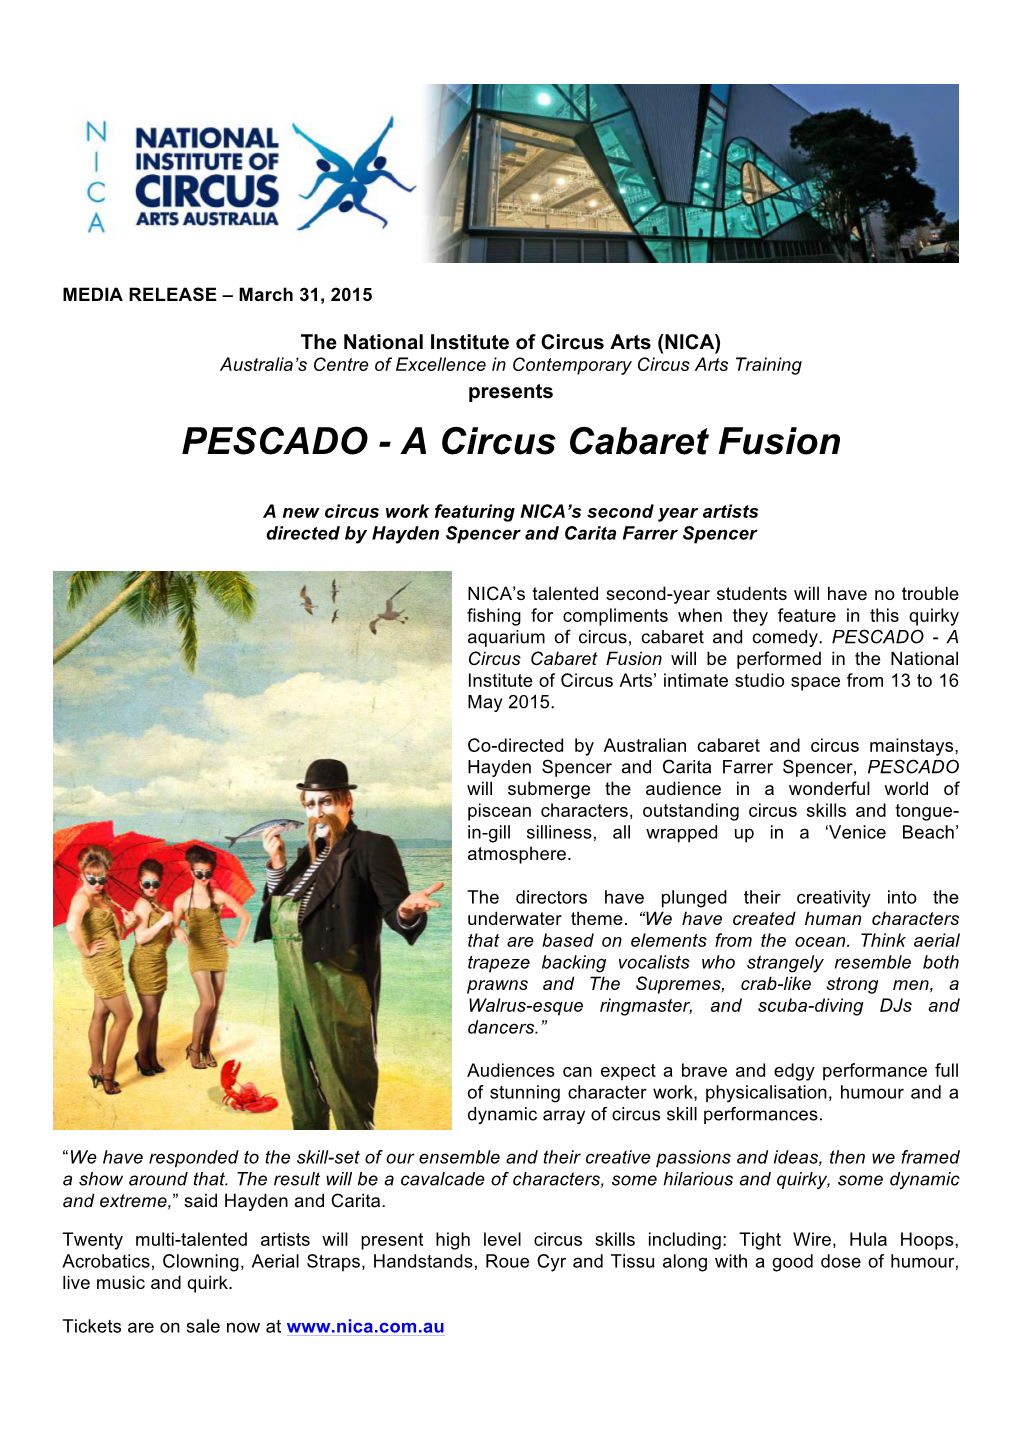 PESCADO - a Circus Cabaret Fusion